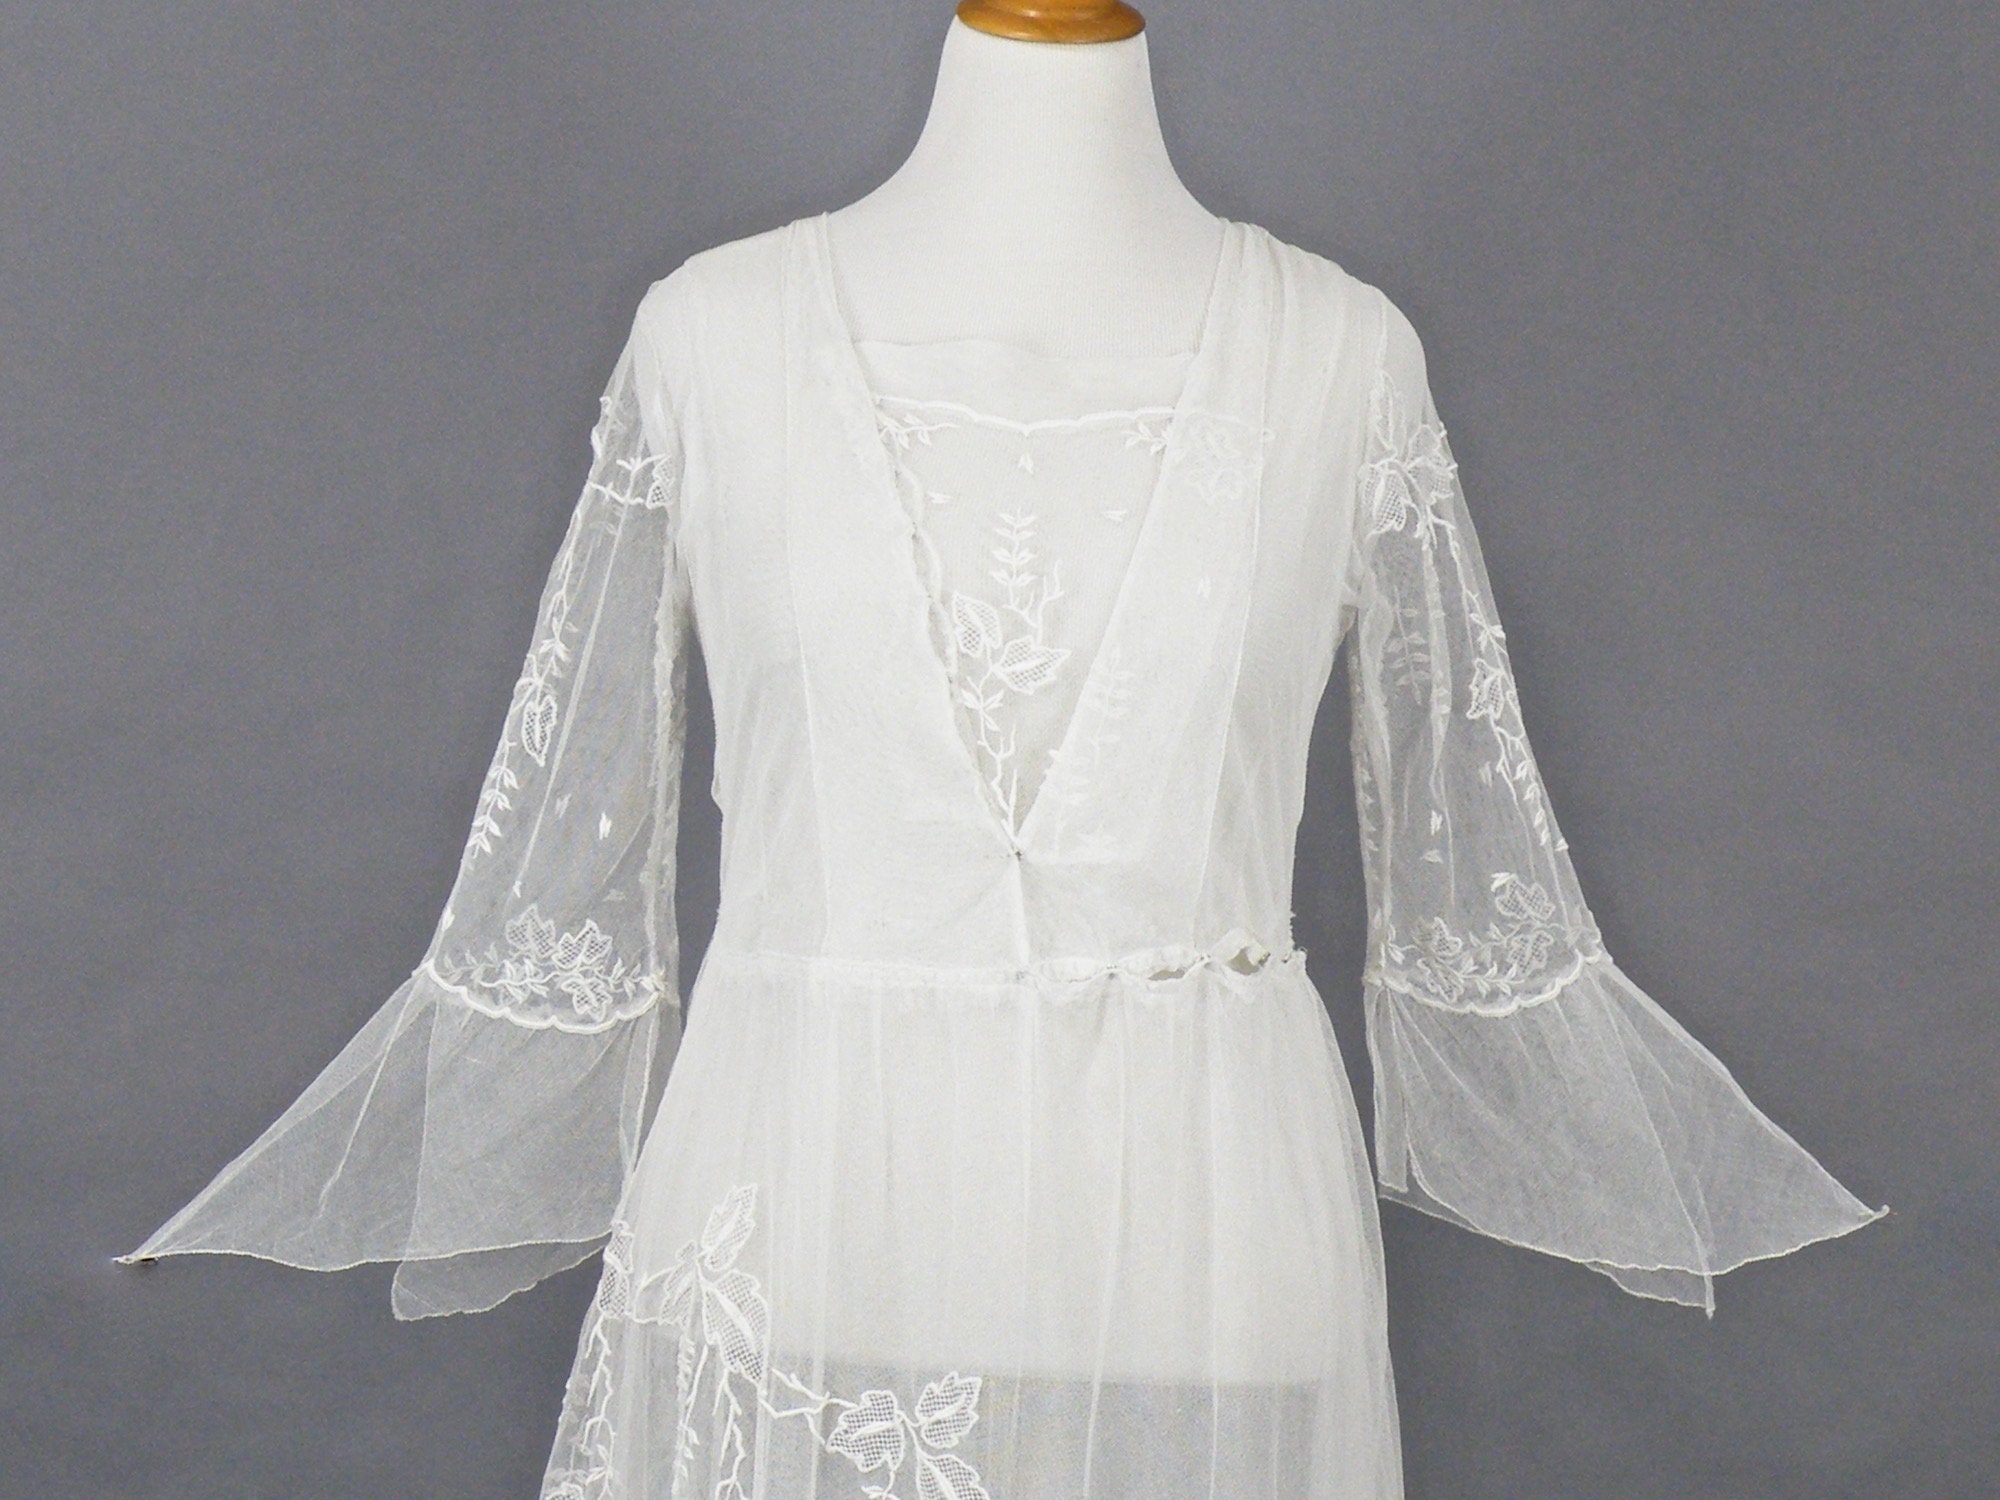 Edwardian Net Lace Dress, Antique 1910s Wedding Dress, Rare Larger Size